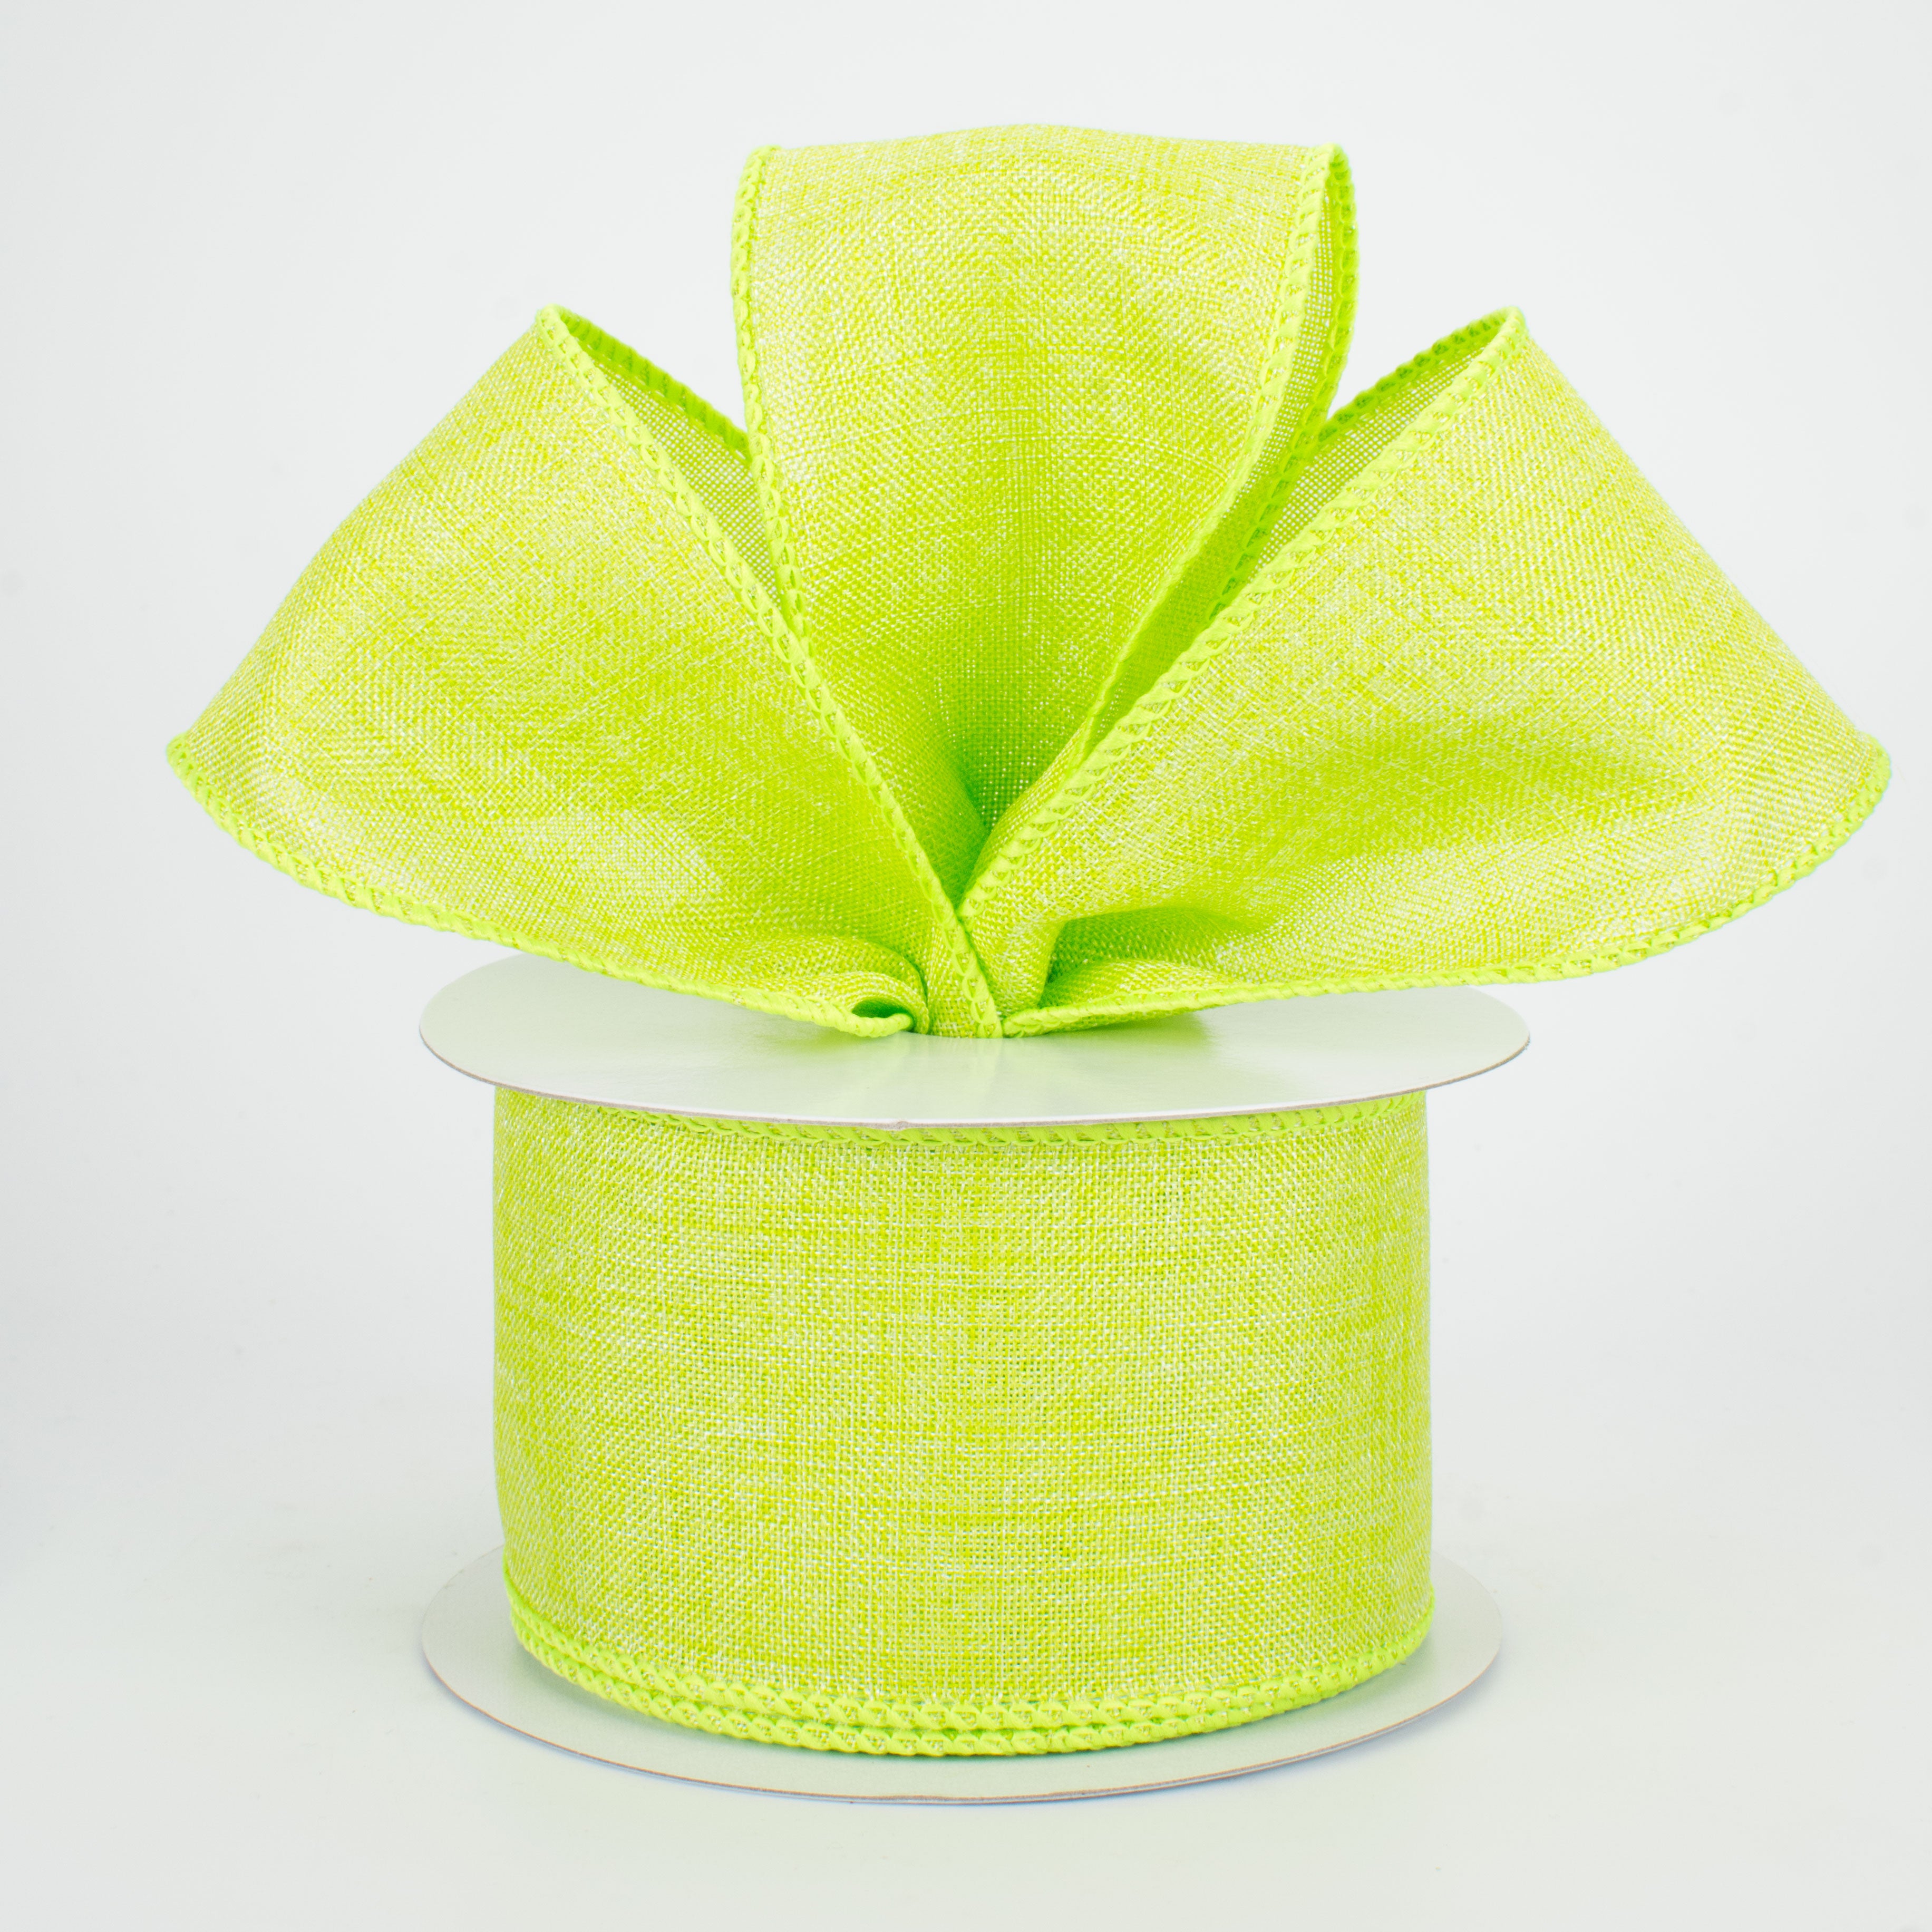 2.5" Shiny Canvas Ribbon: Lime Green (10 Yards)